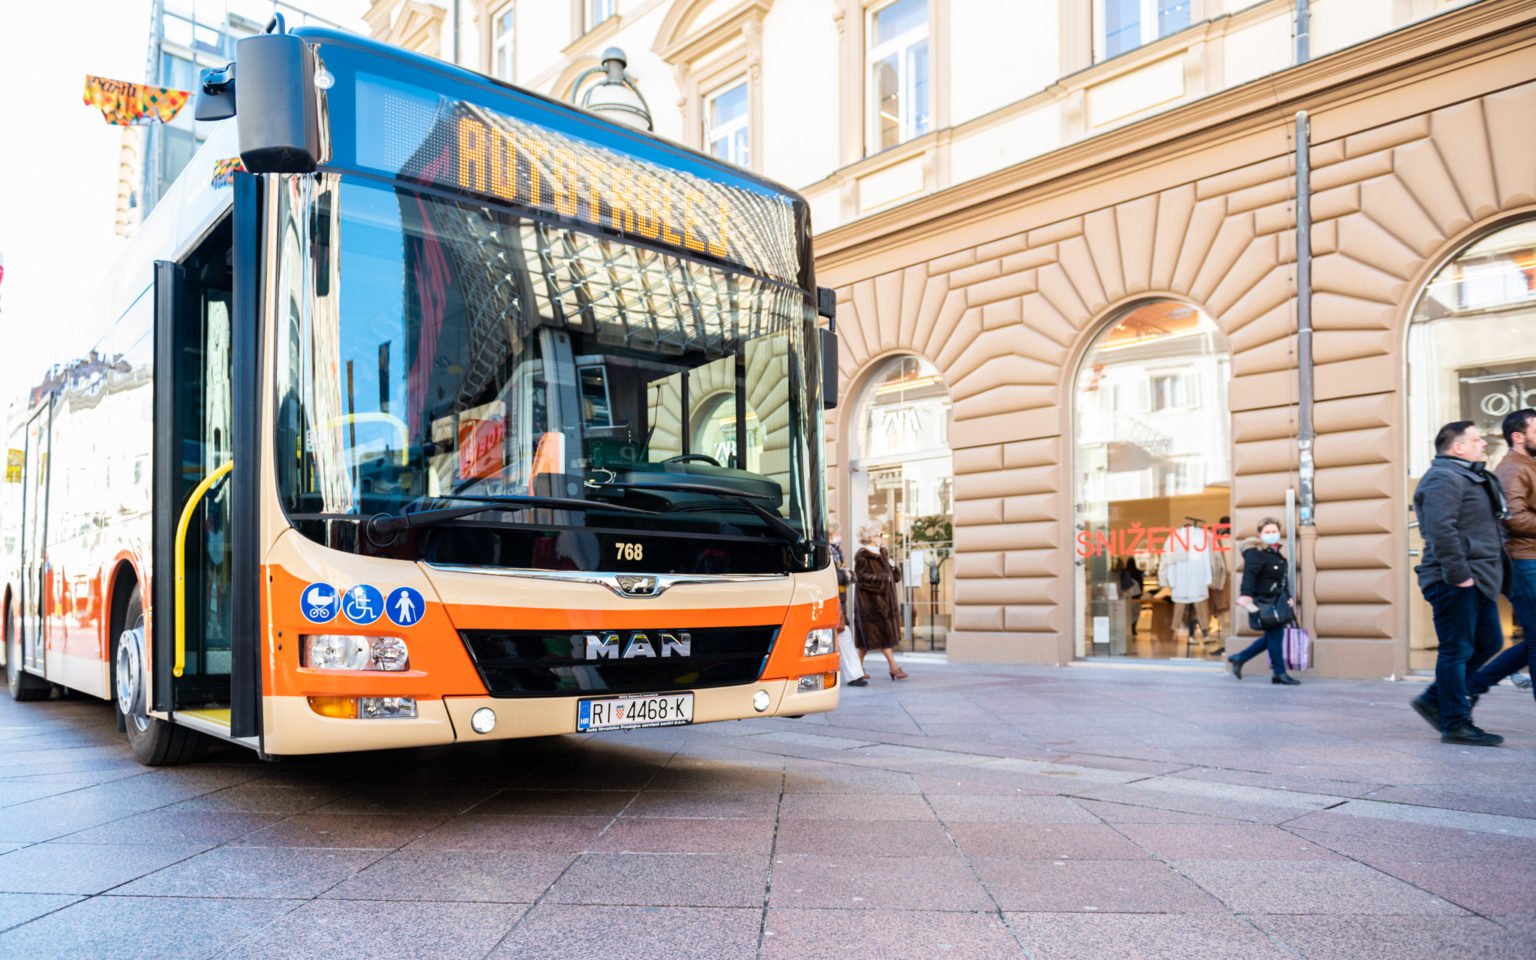 Rijeka introduces a Passenger Information System for public transport